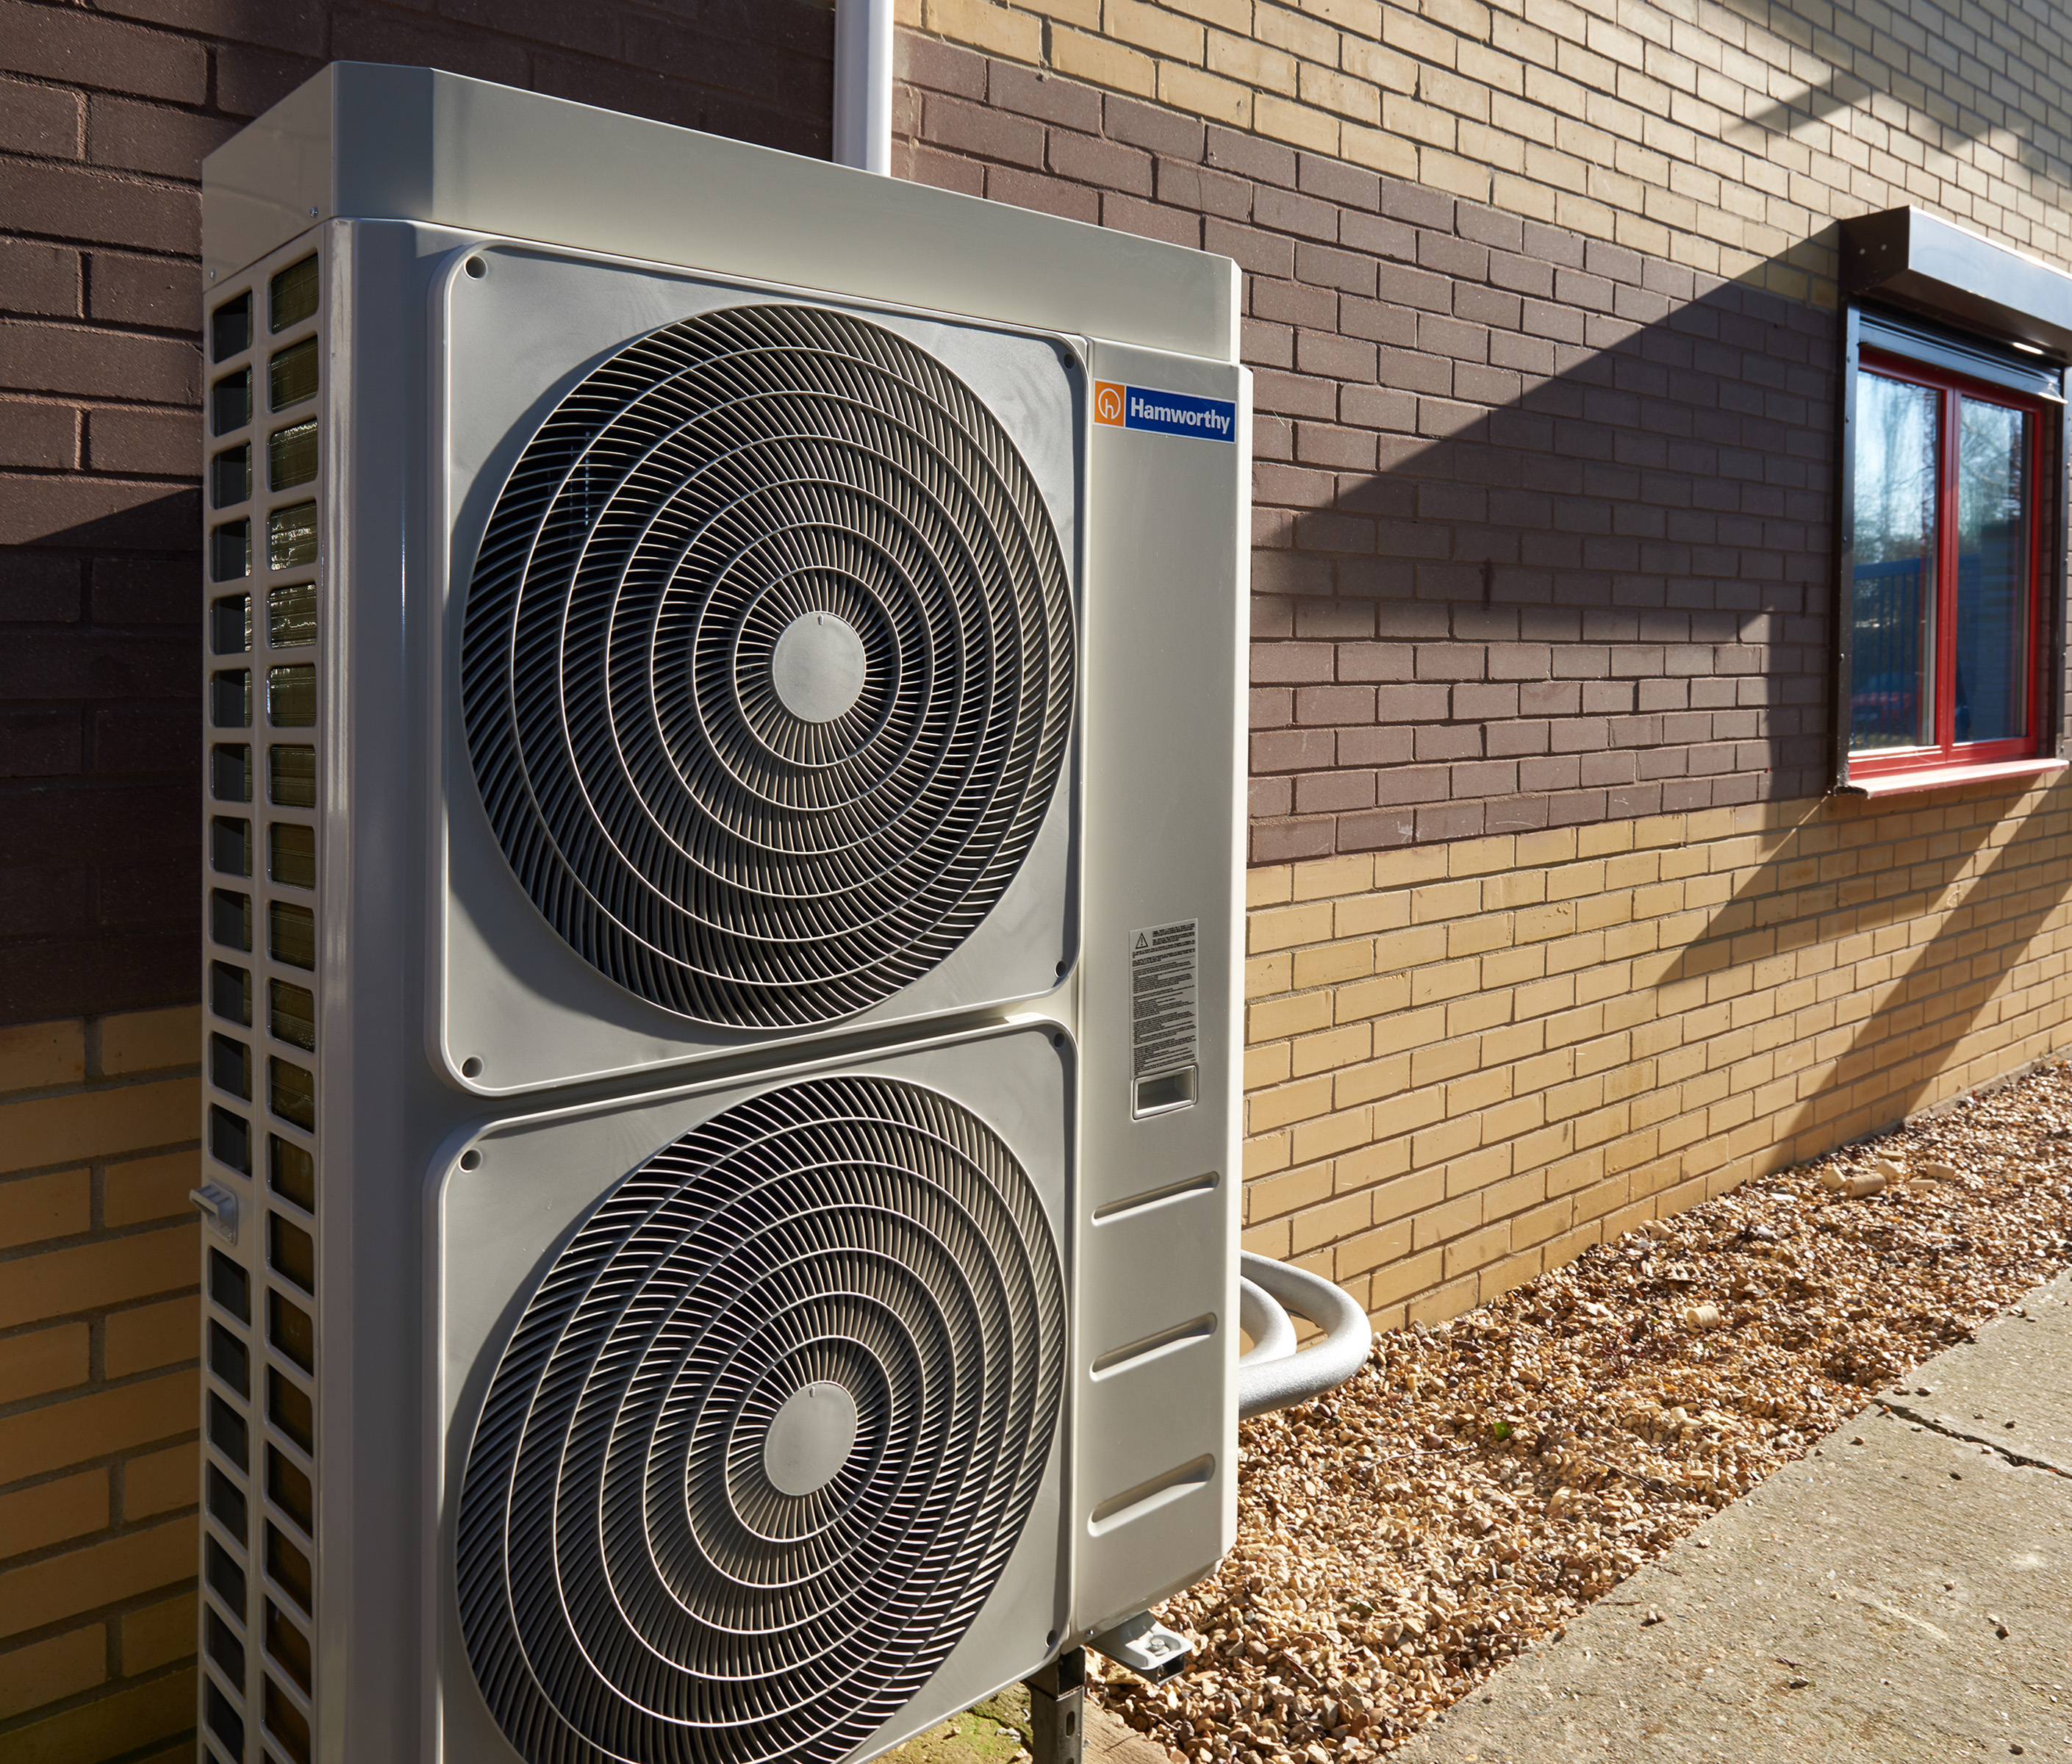 Shastid Energy offices install new Hamworthy heat pump